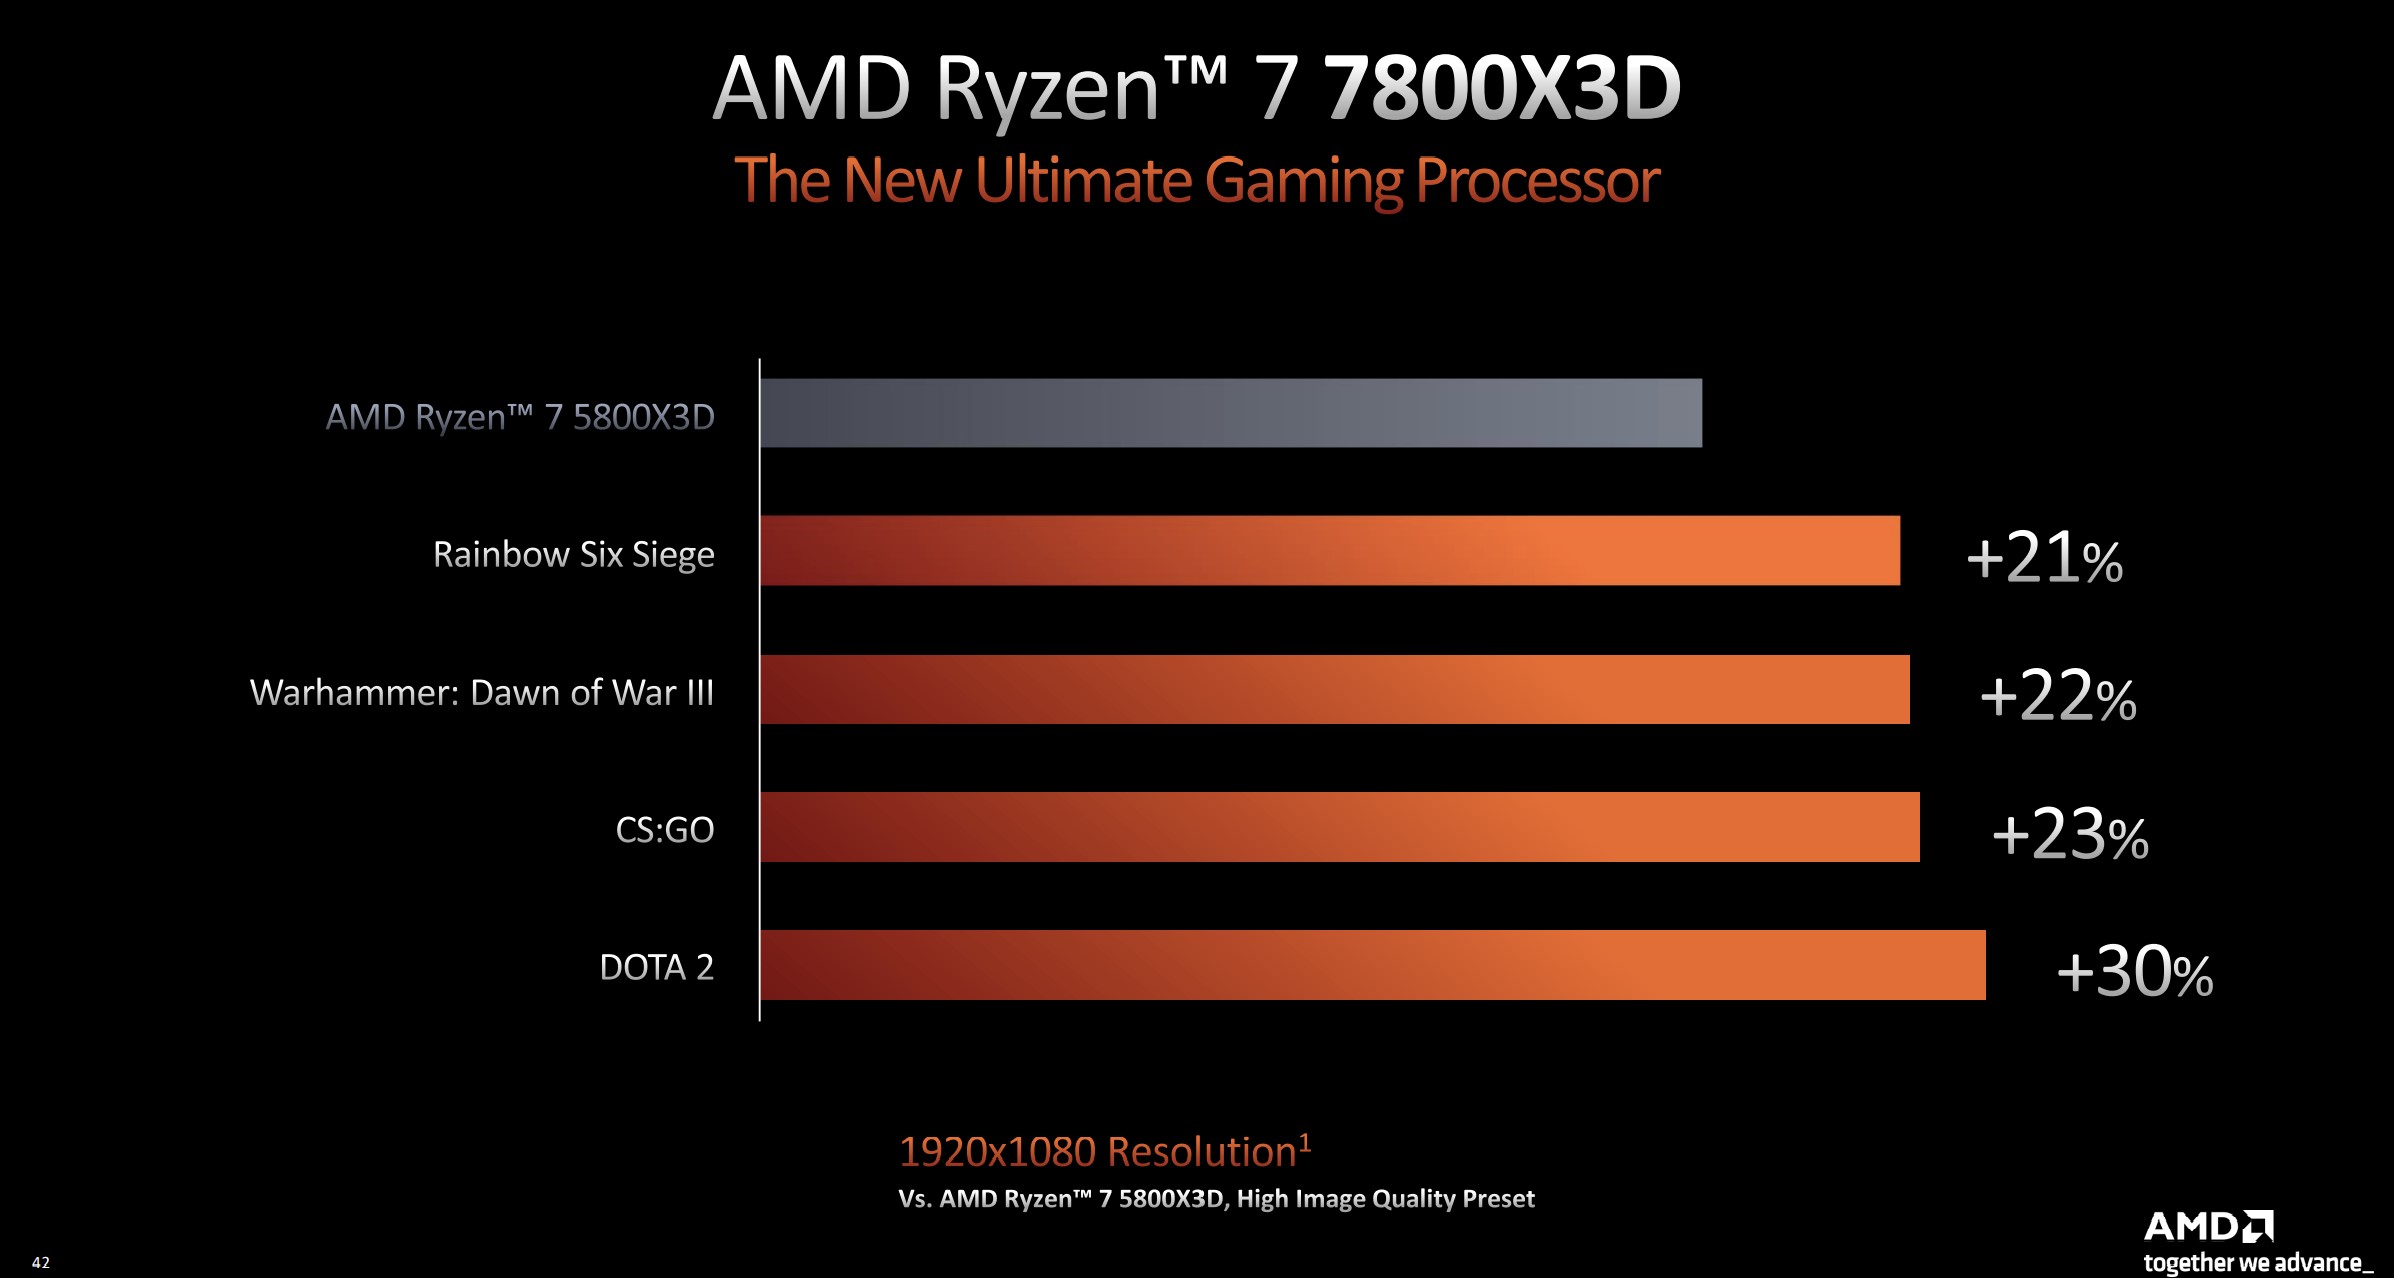 Tabela de desempenho do Ryzen 7 7800X3D.